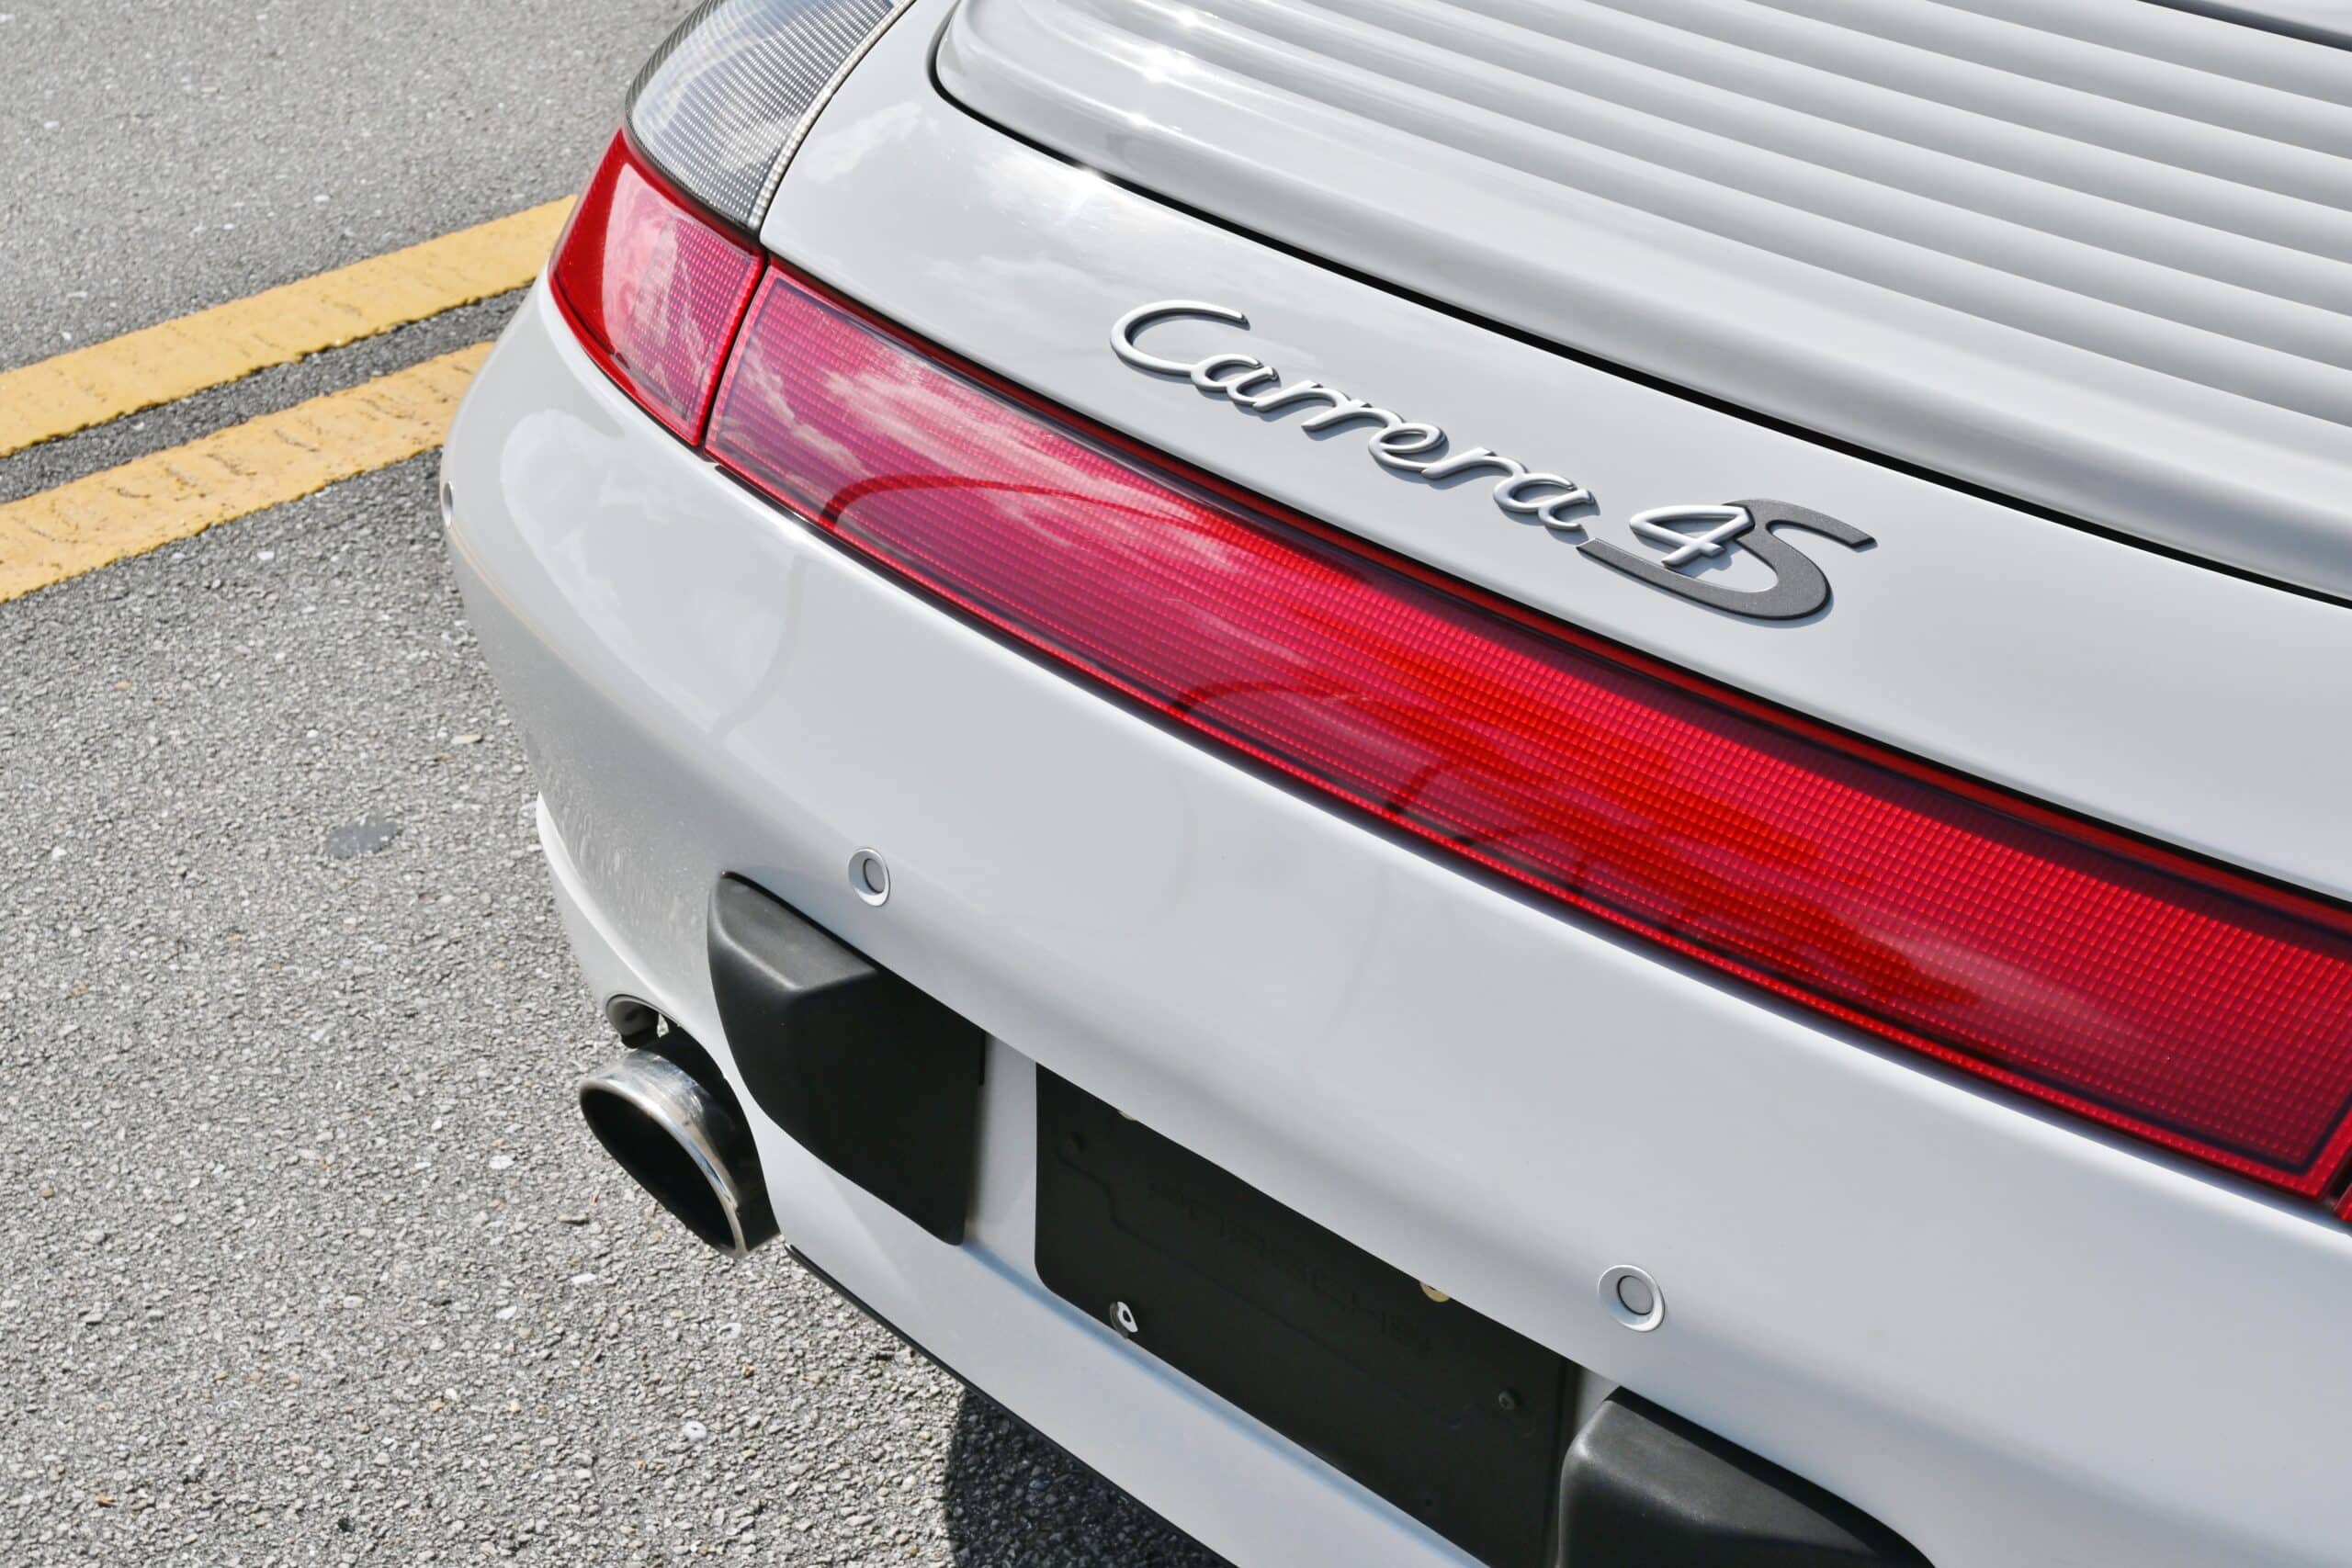 2003 Porsche 911 996 C4S Widebody Rare GP White – 6 Speed Manual – $27k In recent services -IMS update- Unmodified